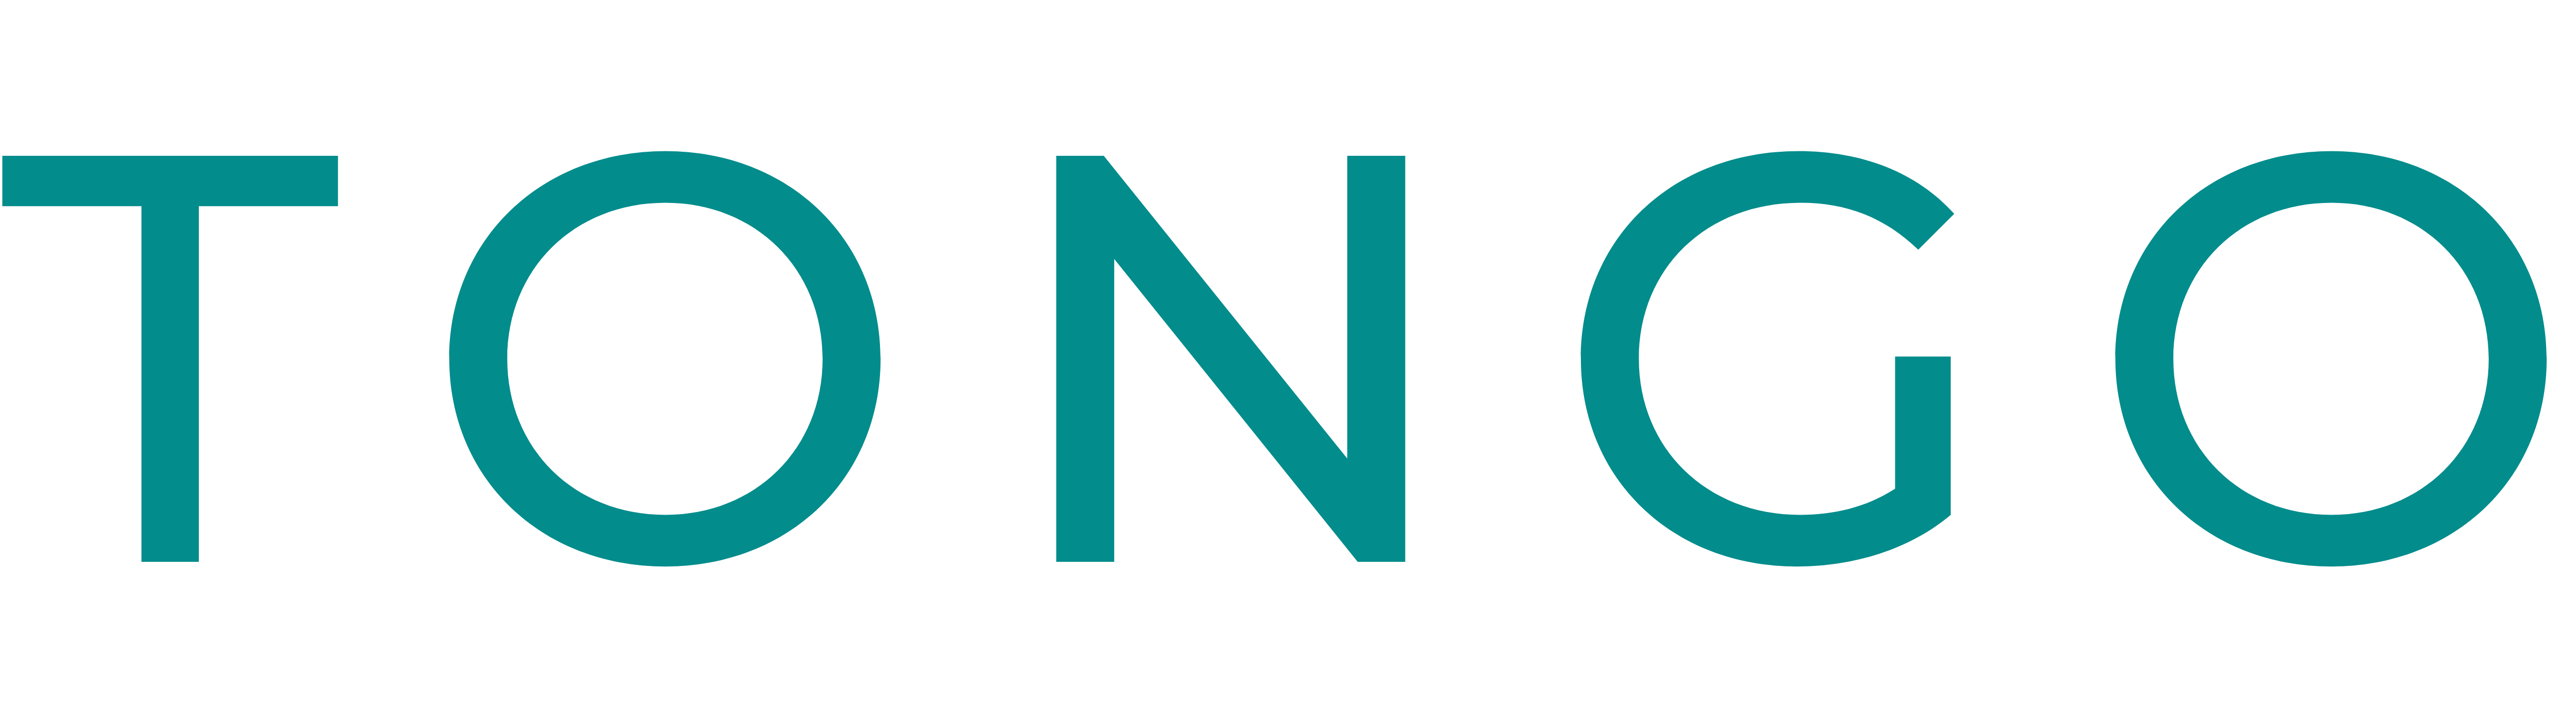 Tongo Logo